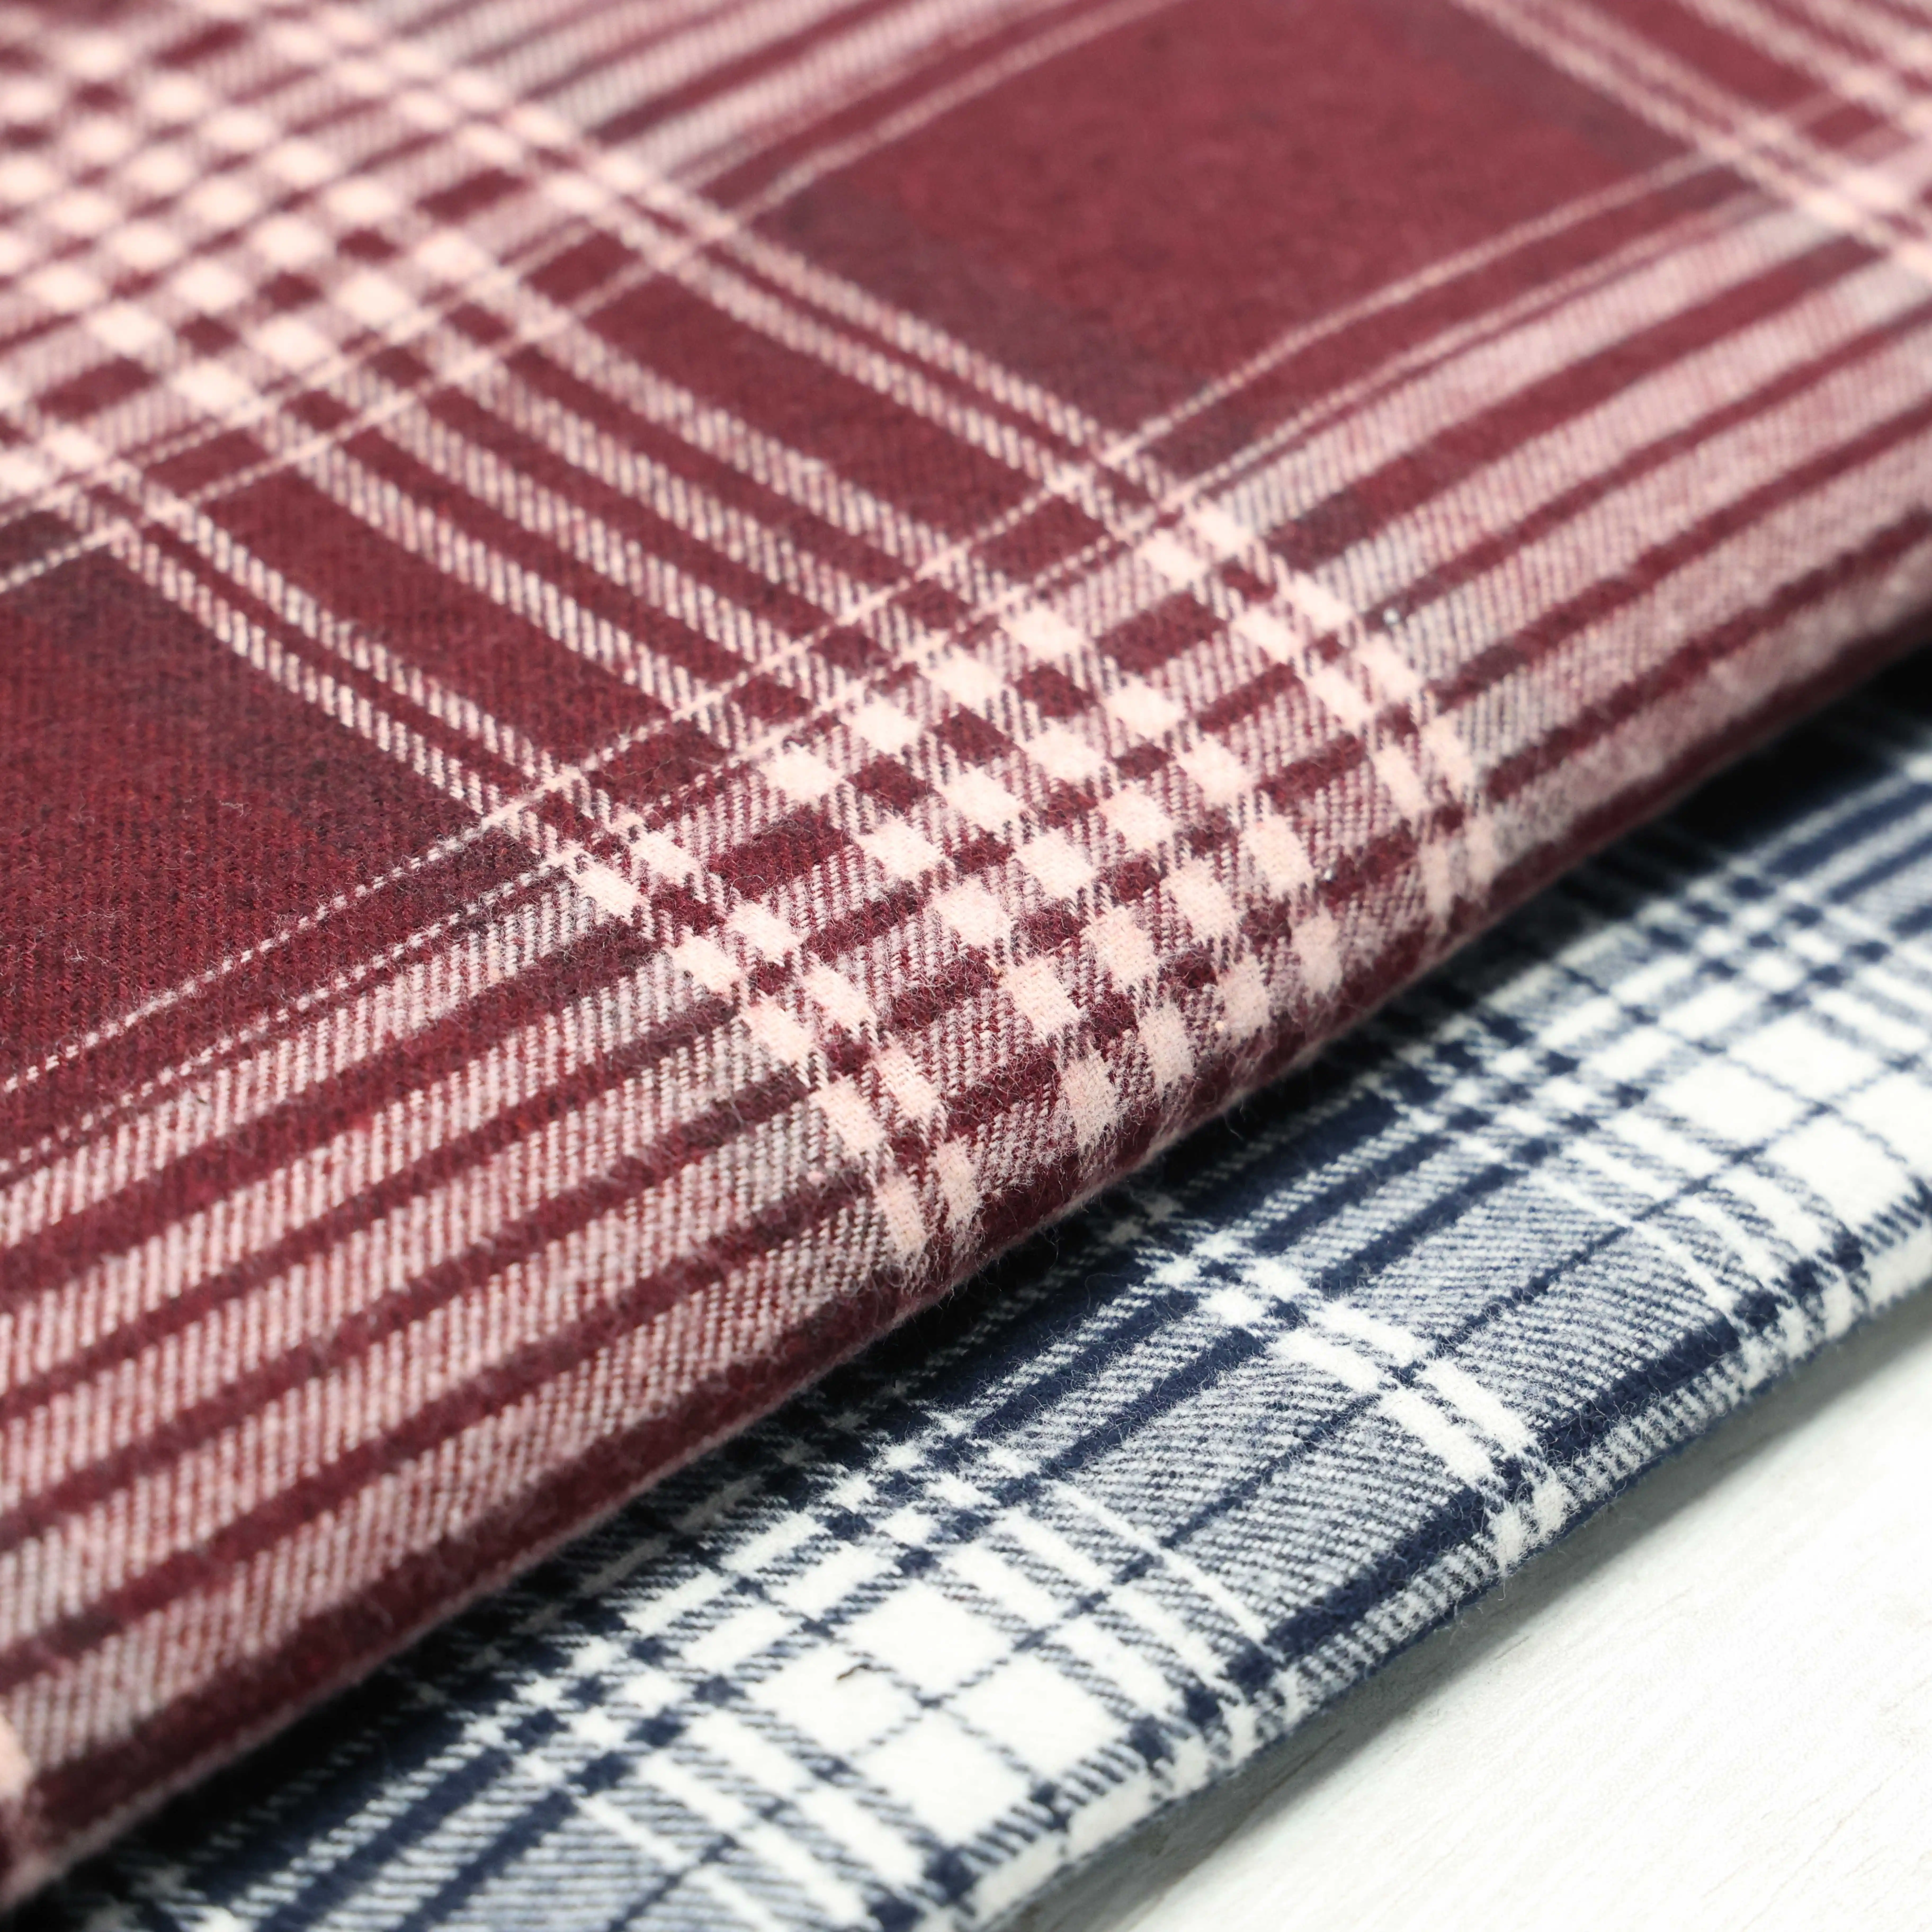 Tekstil Tiongkok benang Viscose katun poliester mode kain flanel cek anyaman celup untuk pakaian